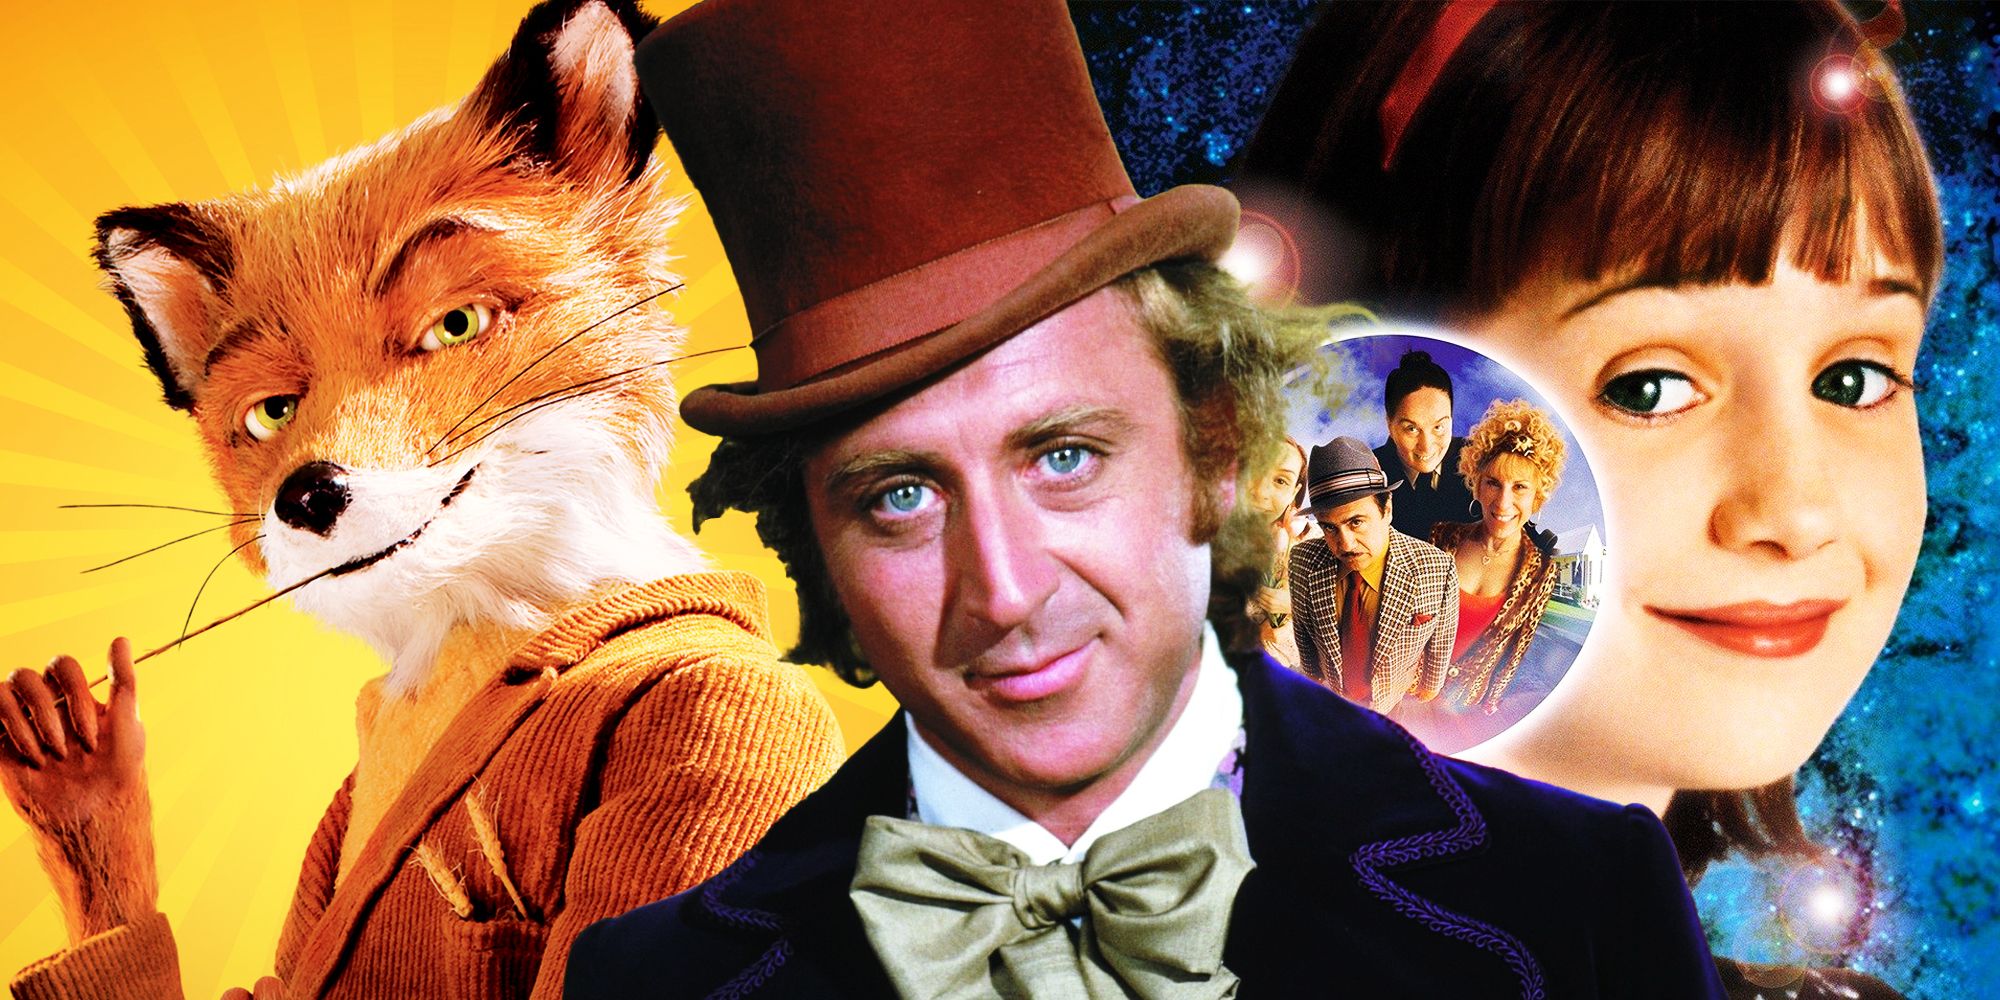 Willy Wonka, Fantastic Mr. Fox, and Matilda